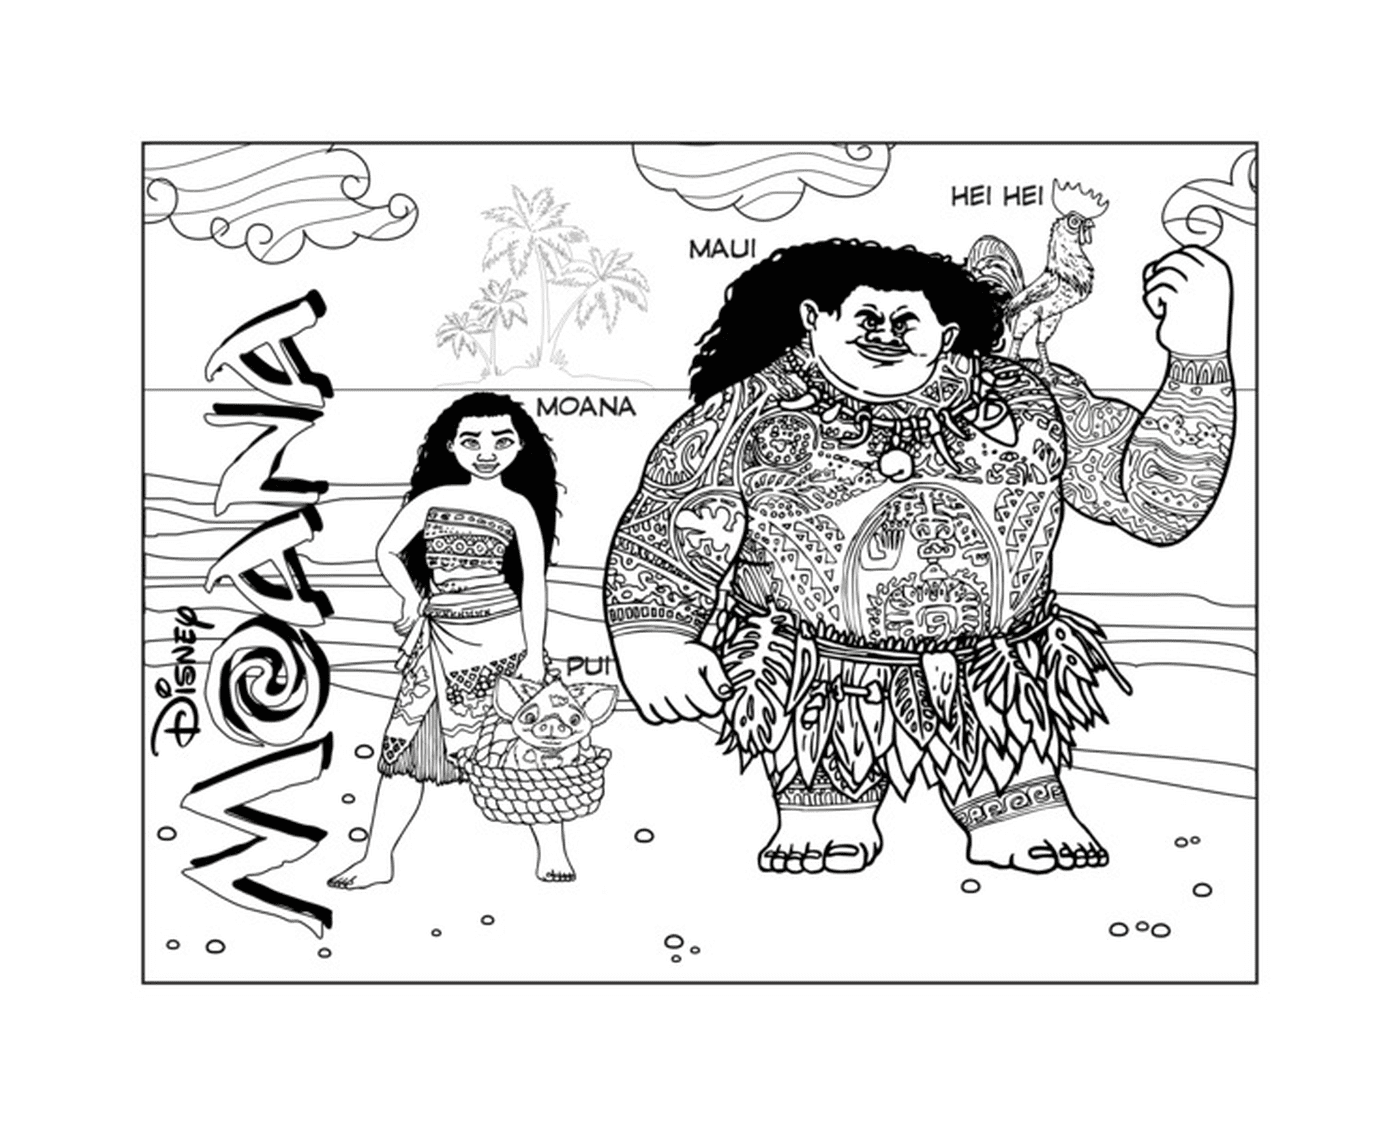  Moana y Maui, dúo de aventureros 